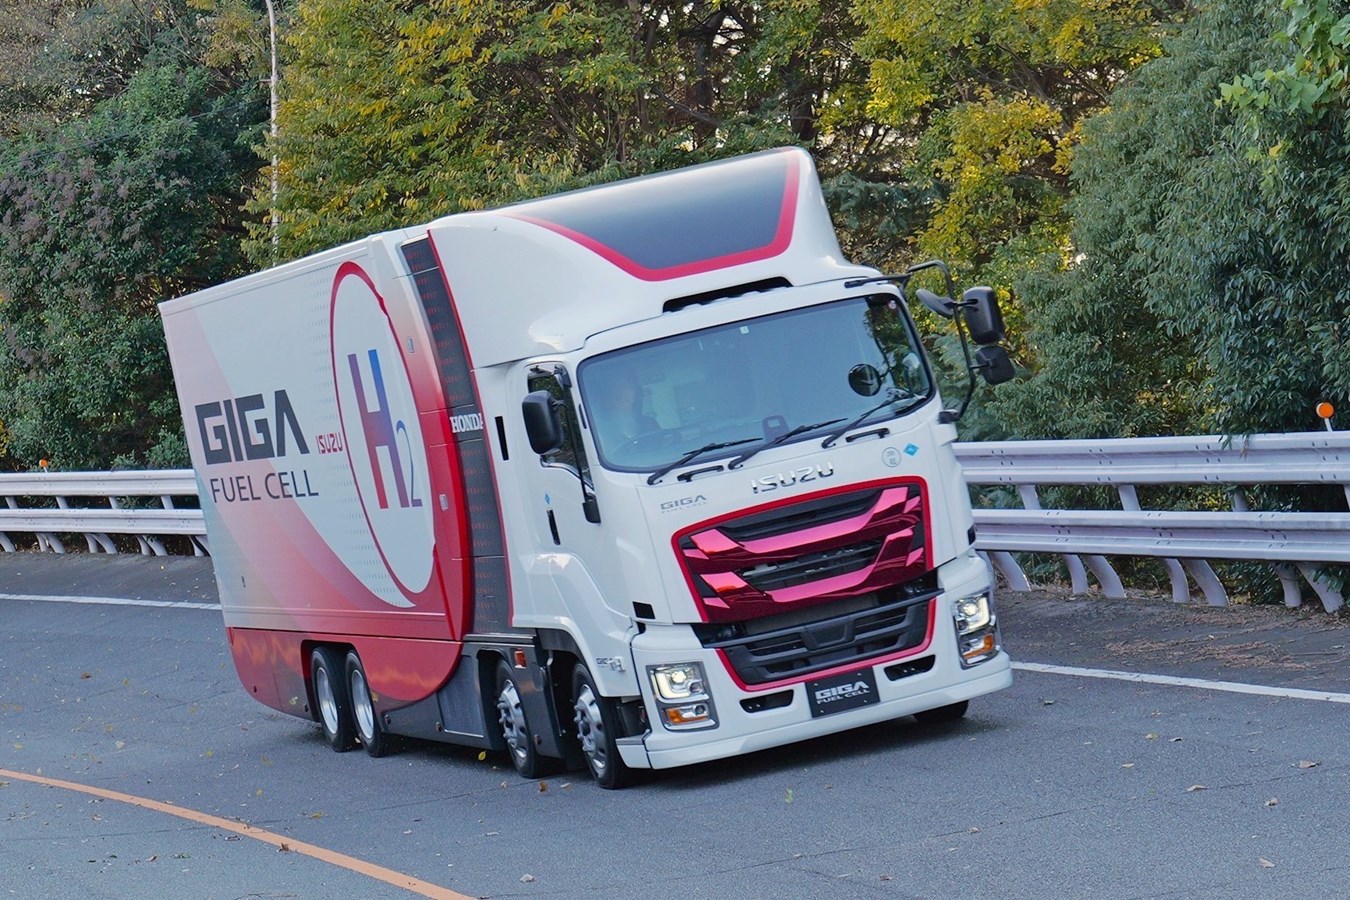 Isuzu and Honda begin demonstration testing of fuel cell powered heavy-duty truck on public roads in Japan